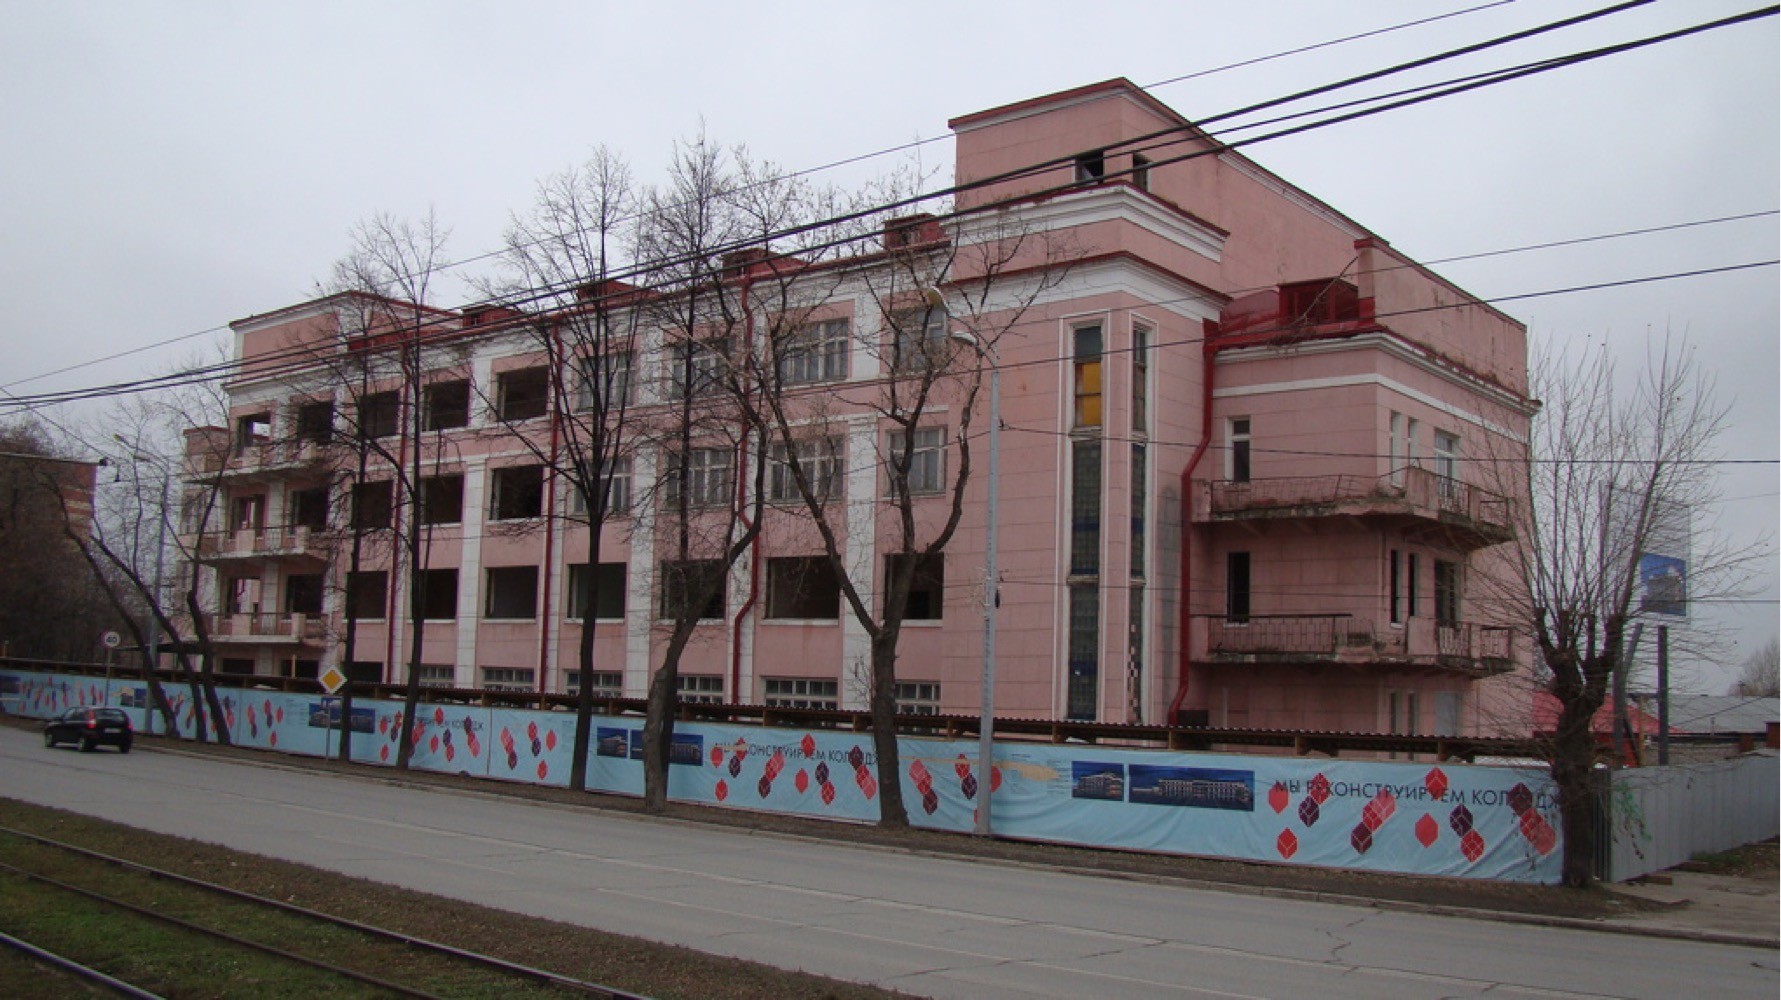 Сайт славяновского колледжа